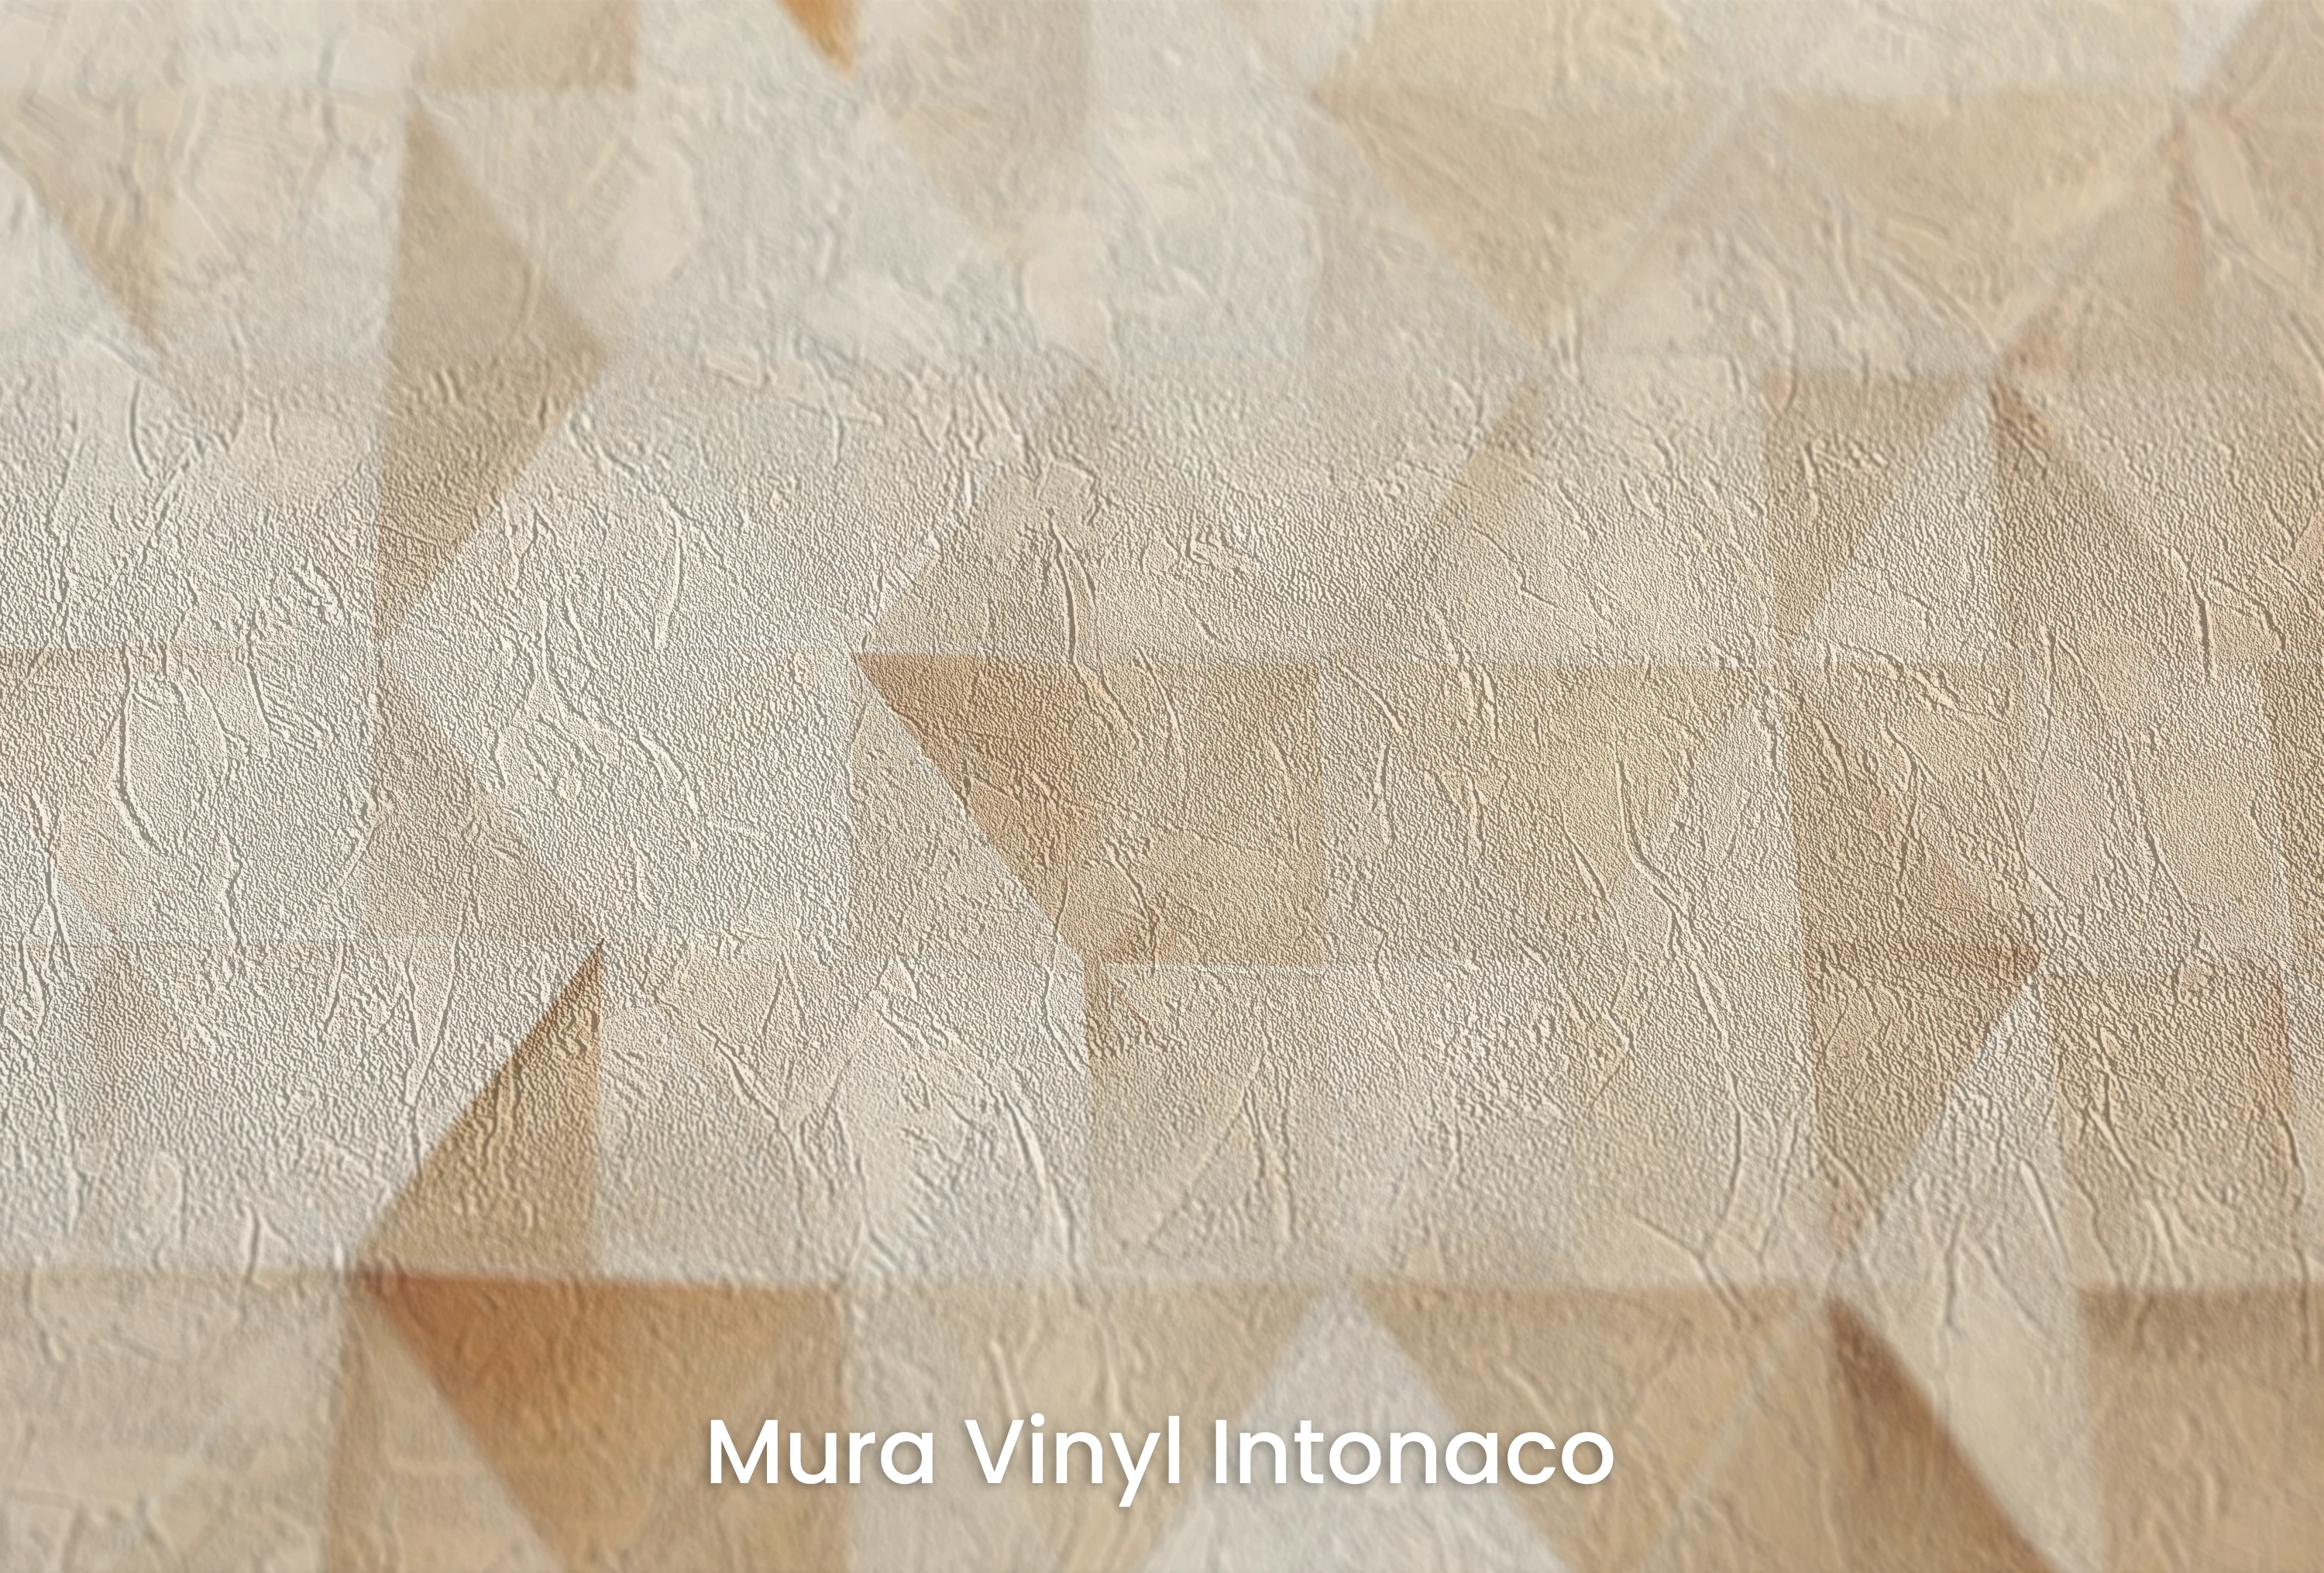  Mura Vinyl Intonaco - Tapeta o strukturze tartego tynku